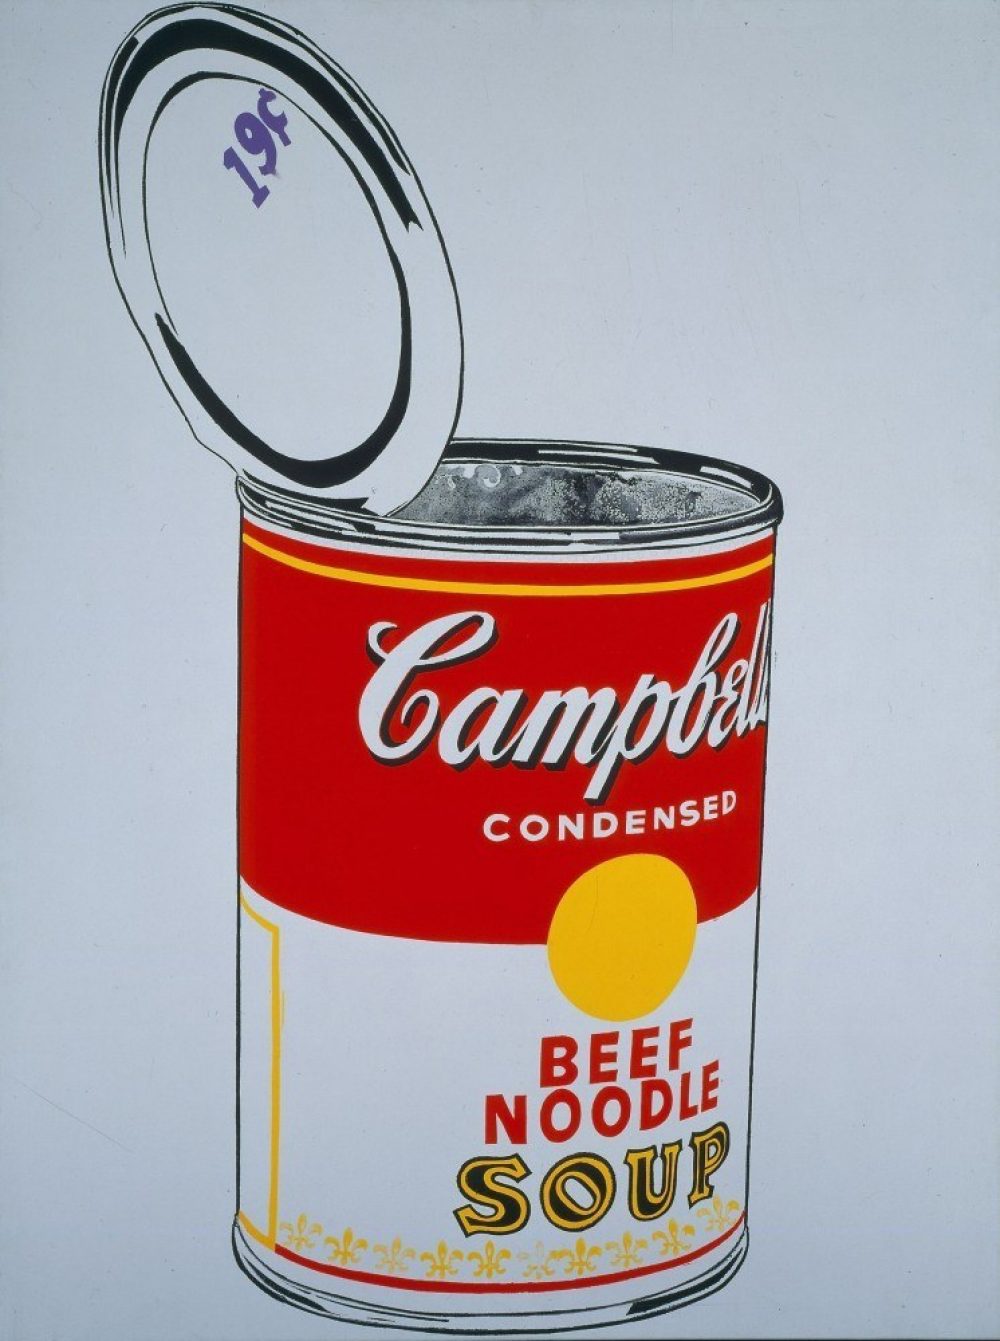 Andy Warhol's Big Campbells Soup-Can